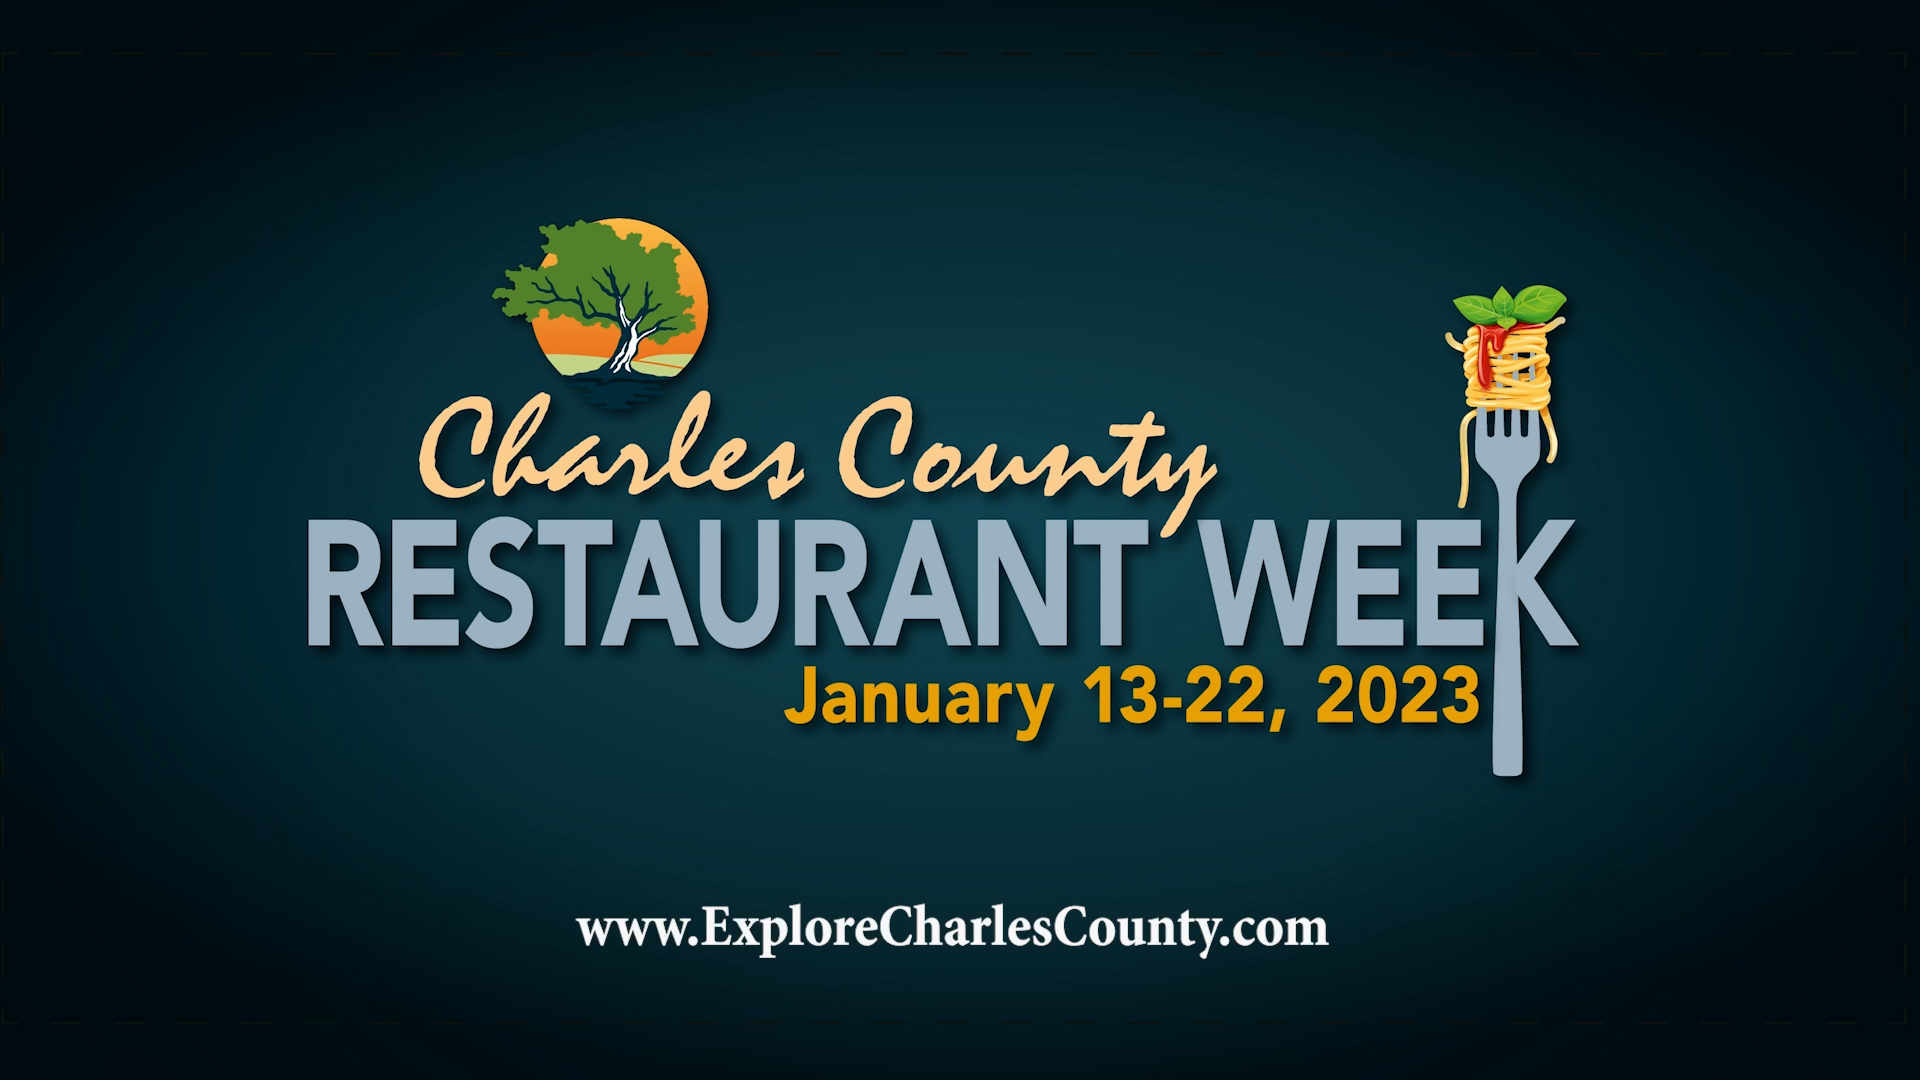 Your Charles CountyRestaurant Week 2023